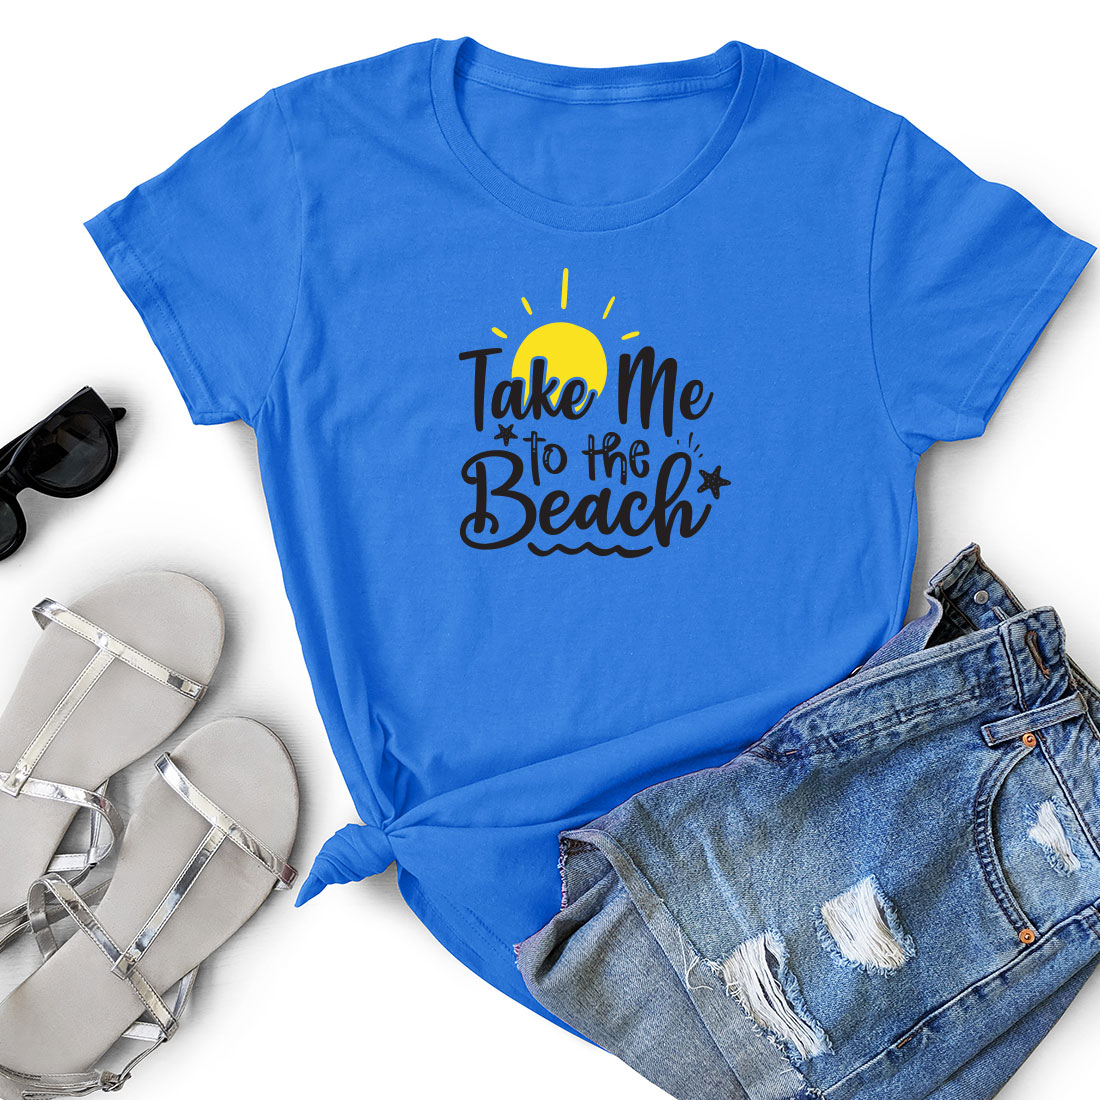 T - shirt that says take me to the beach.